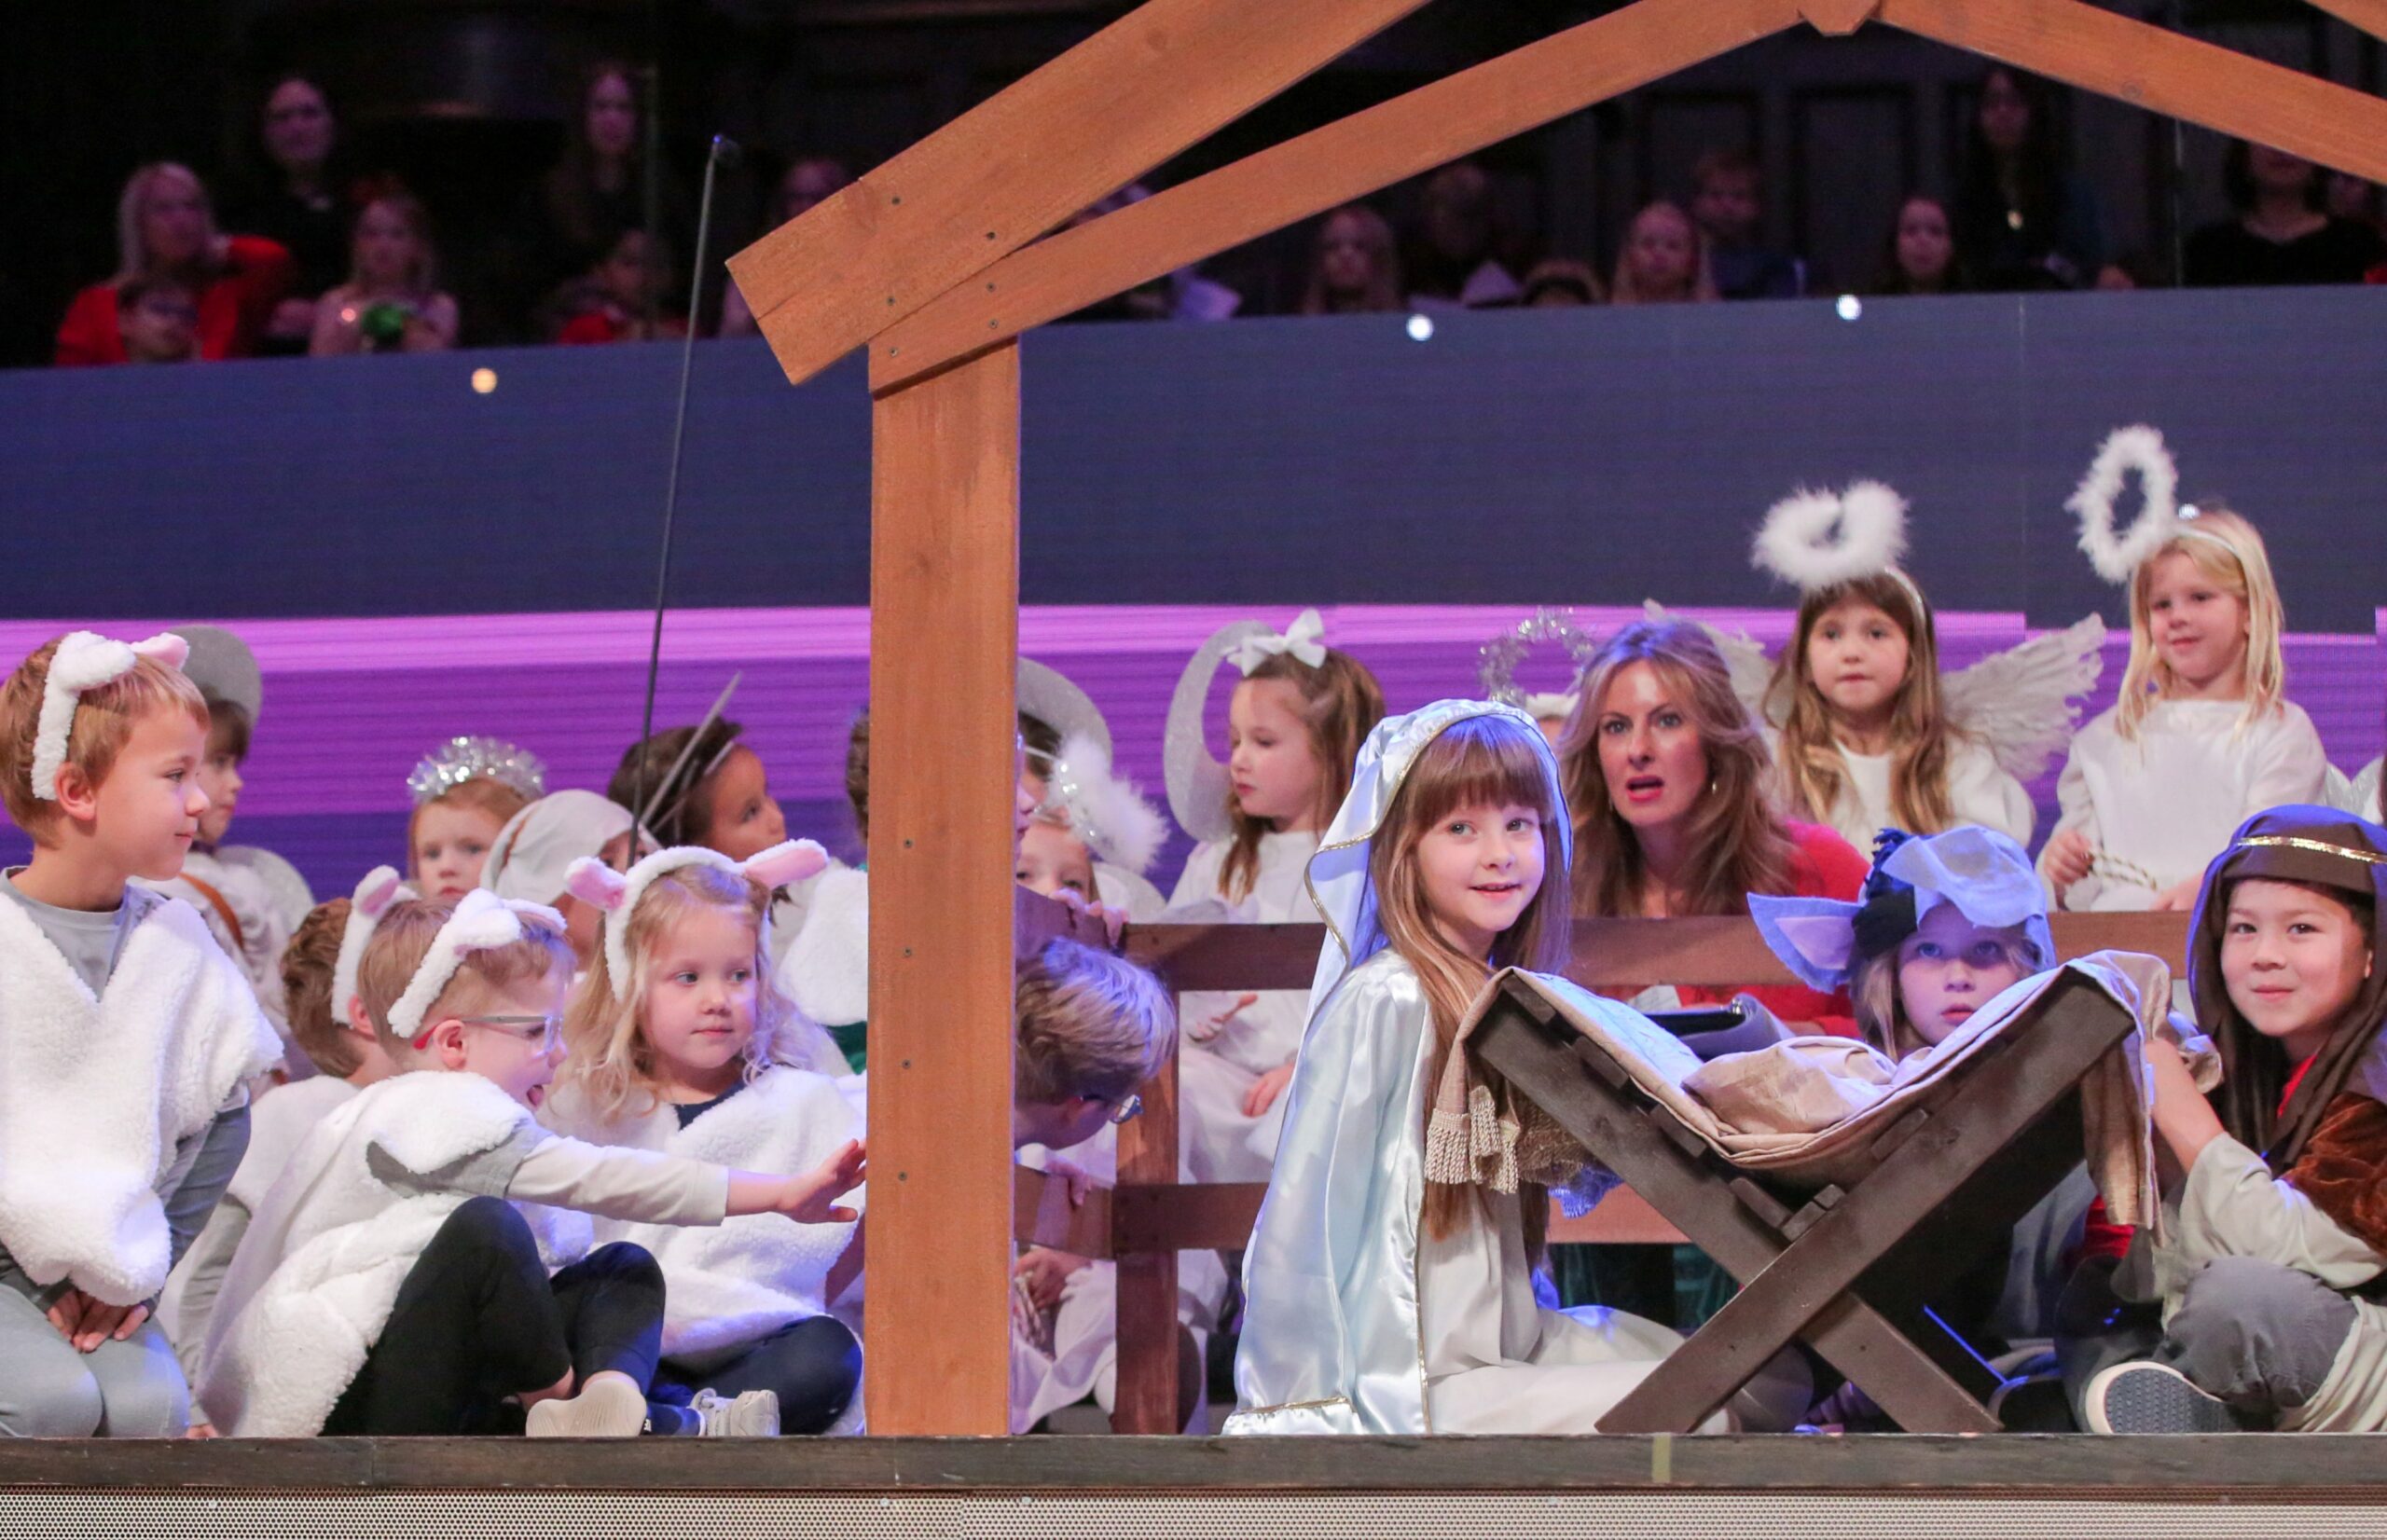 Children's Nativity Service